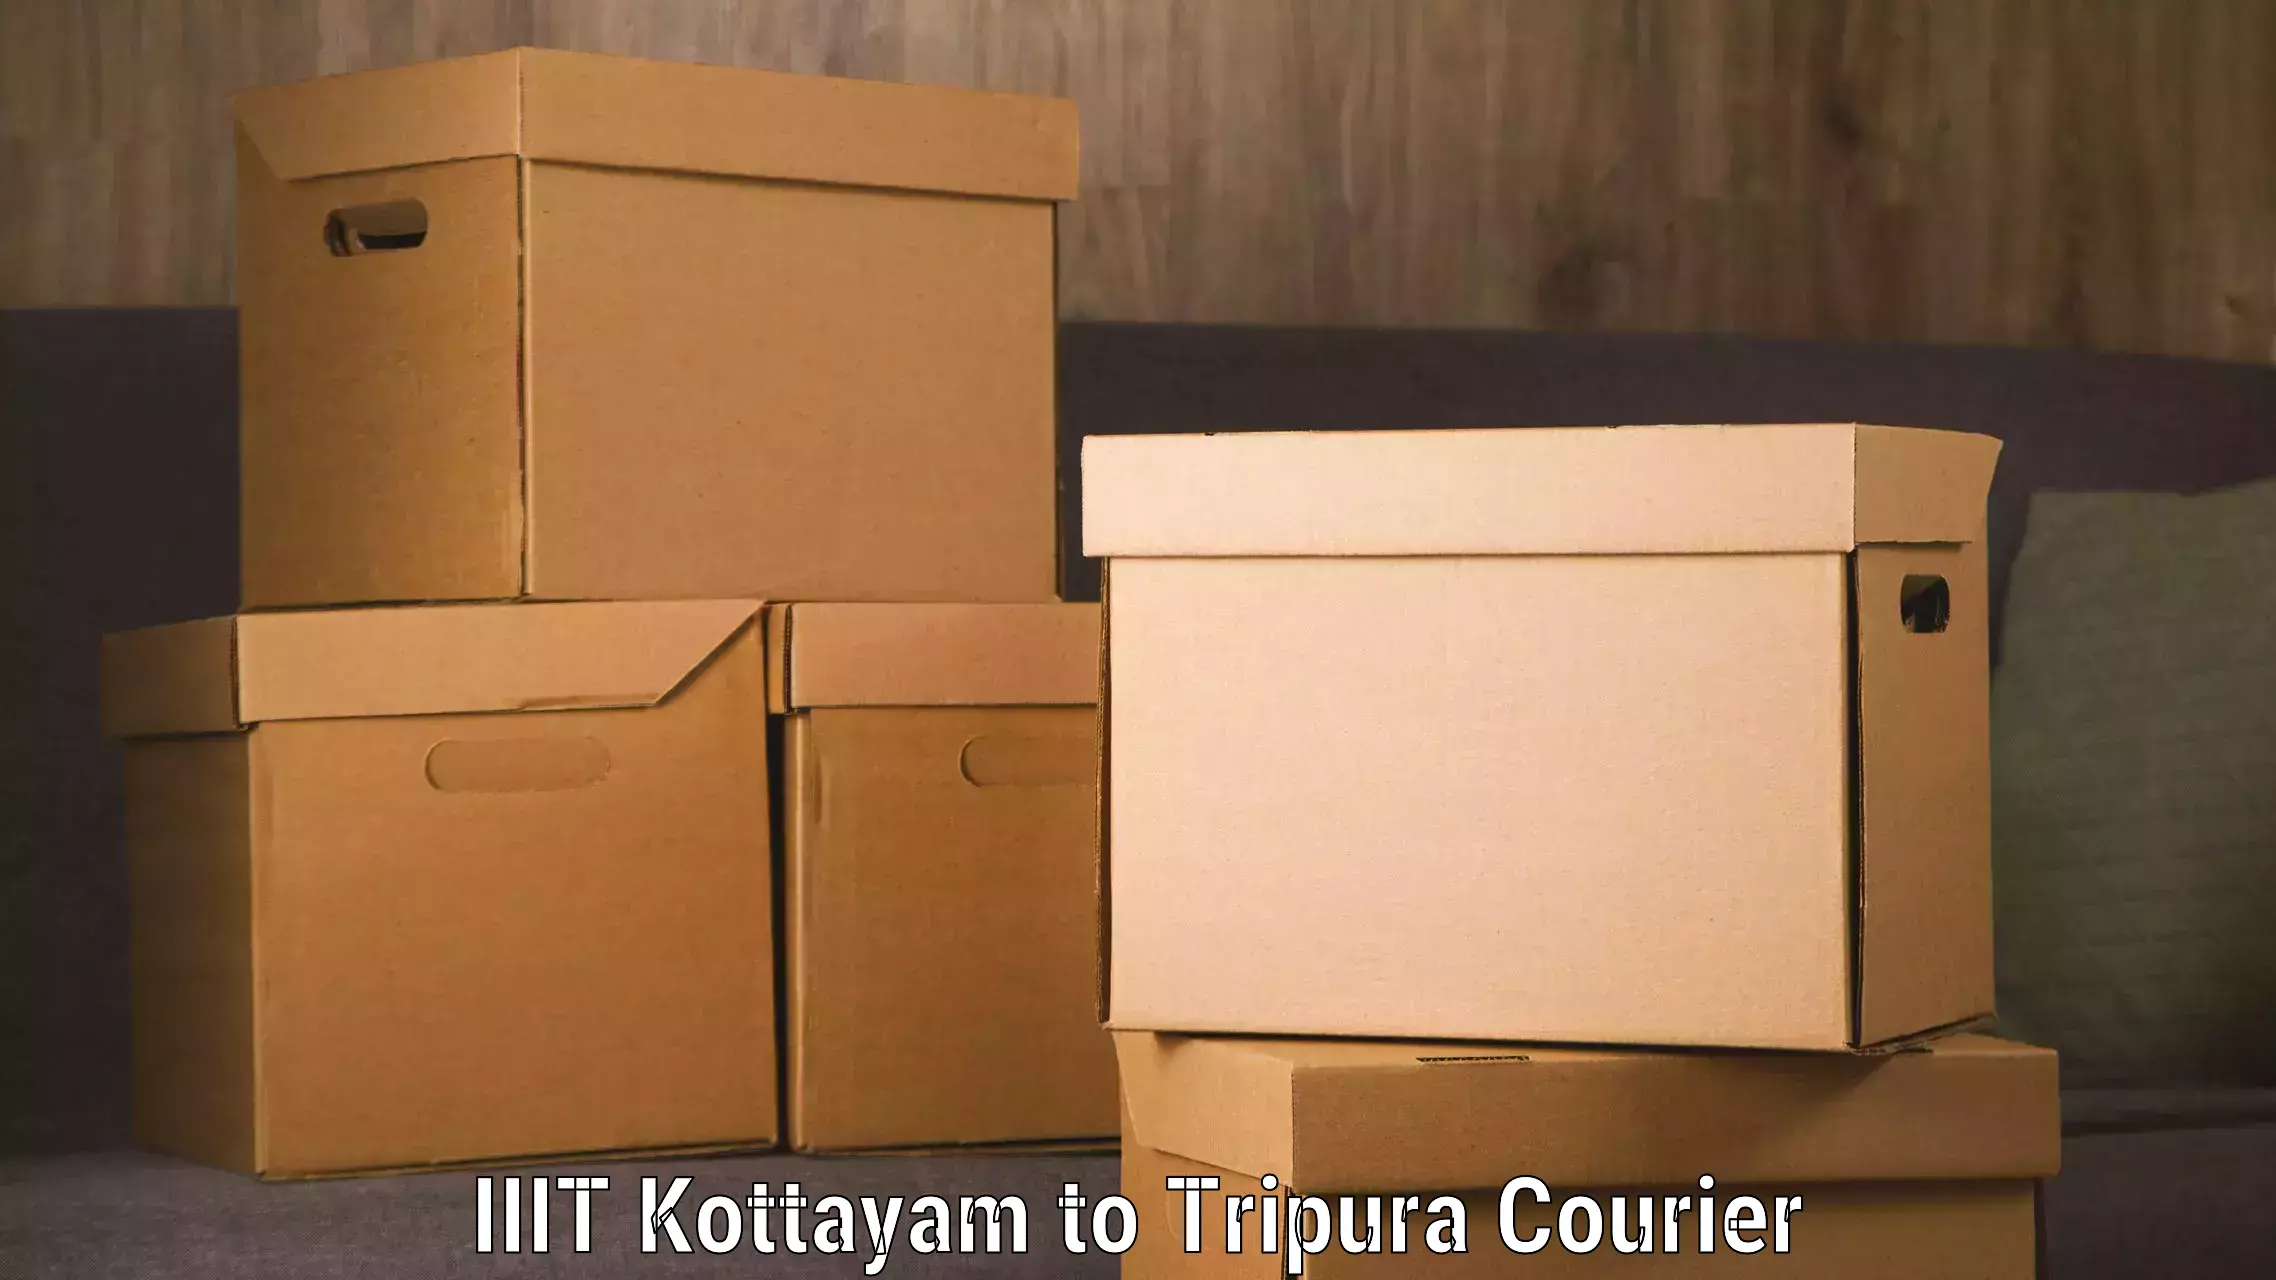 Global logistics network IIIT Kottayam to Tripura